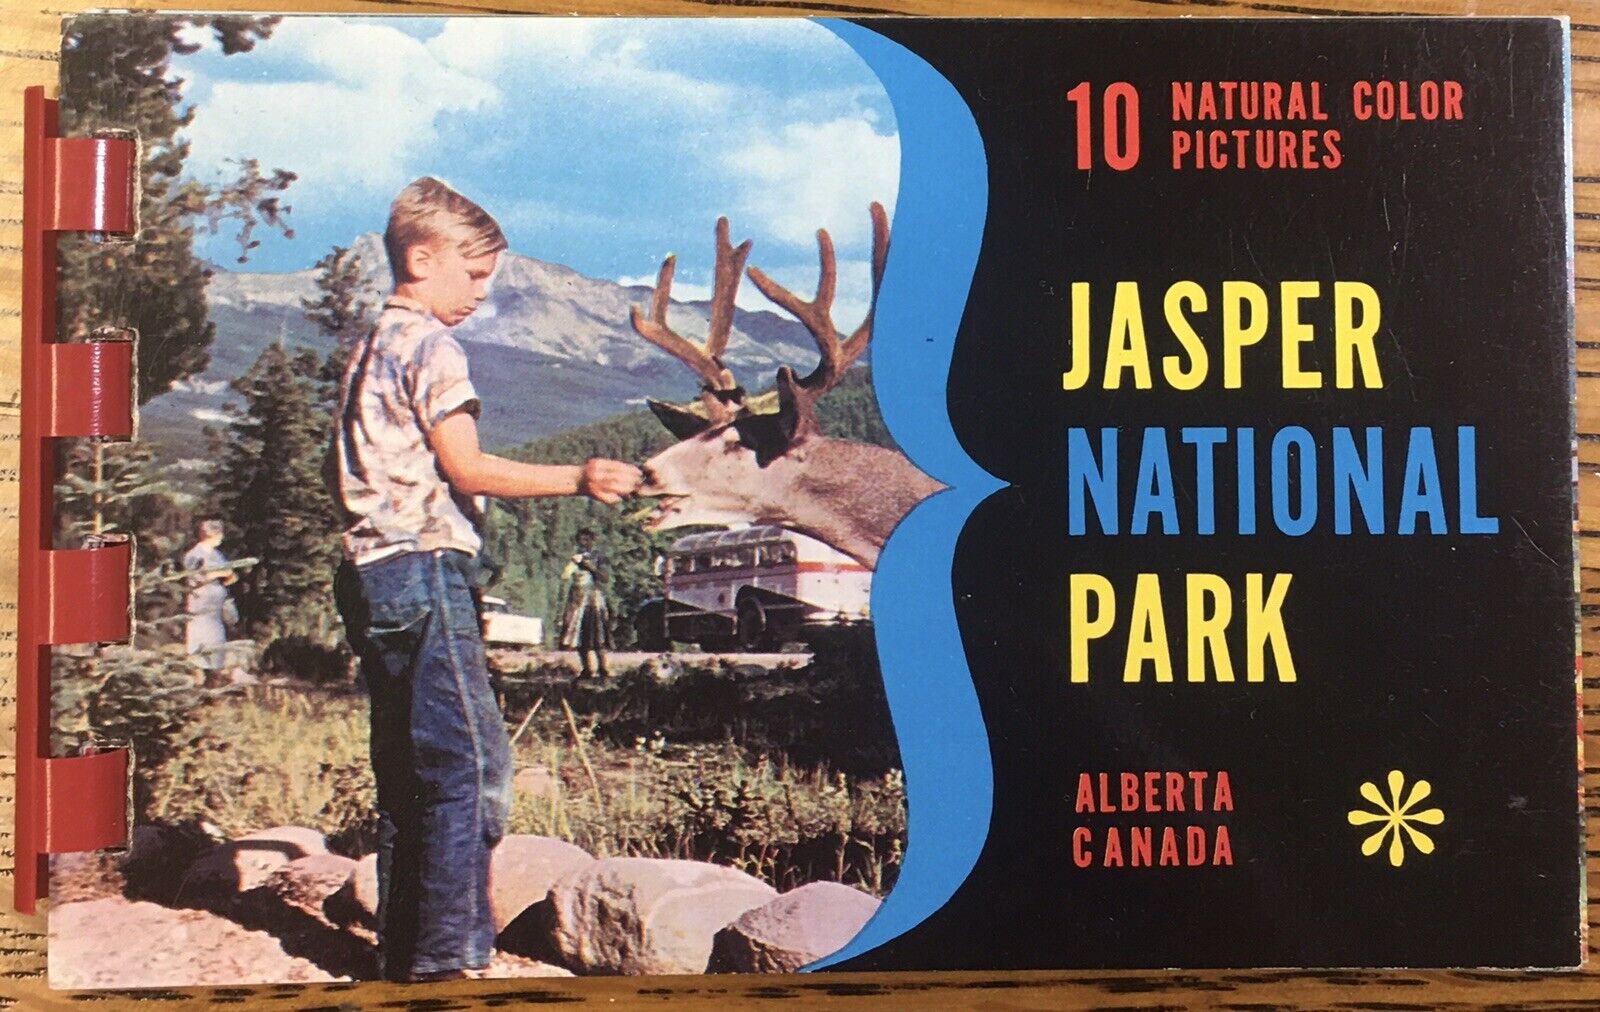 Jasper National Park Alberta, Canada Souvenir Color Picture Book, 4.25” x 2.75”